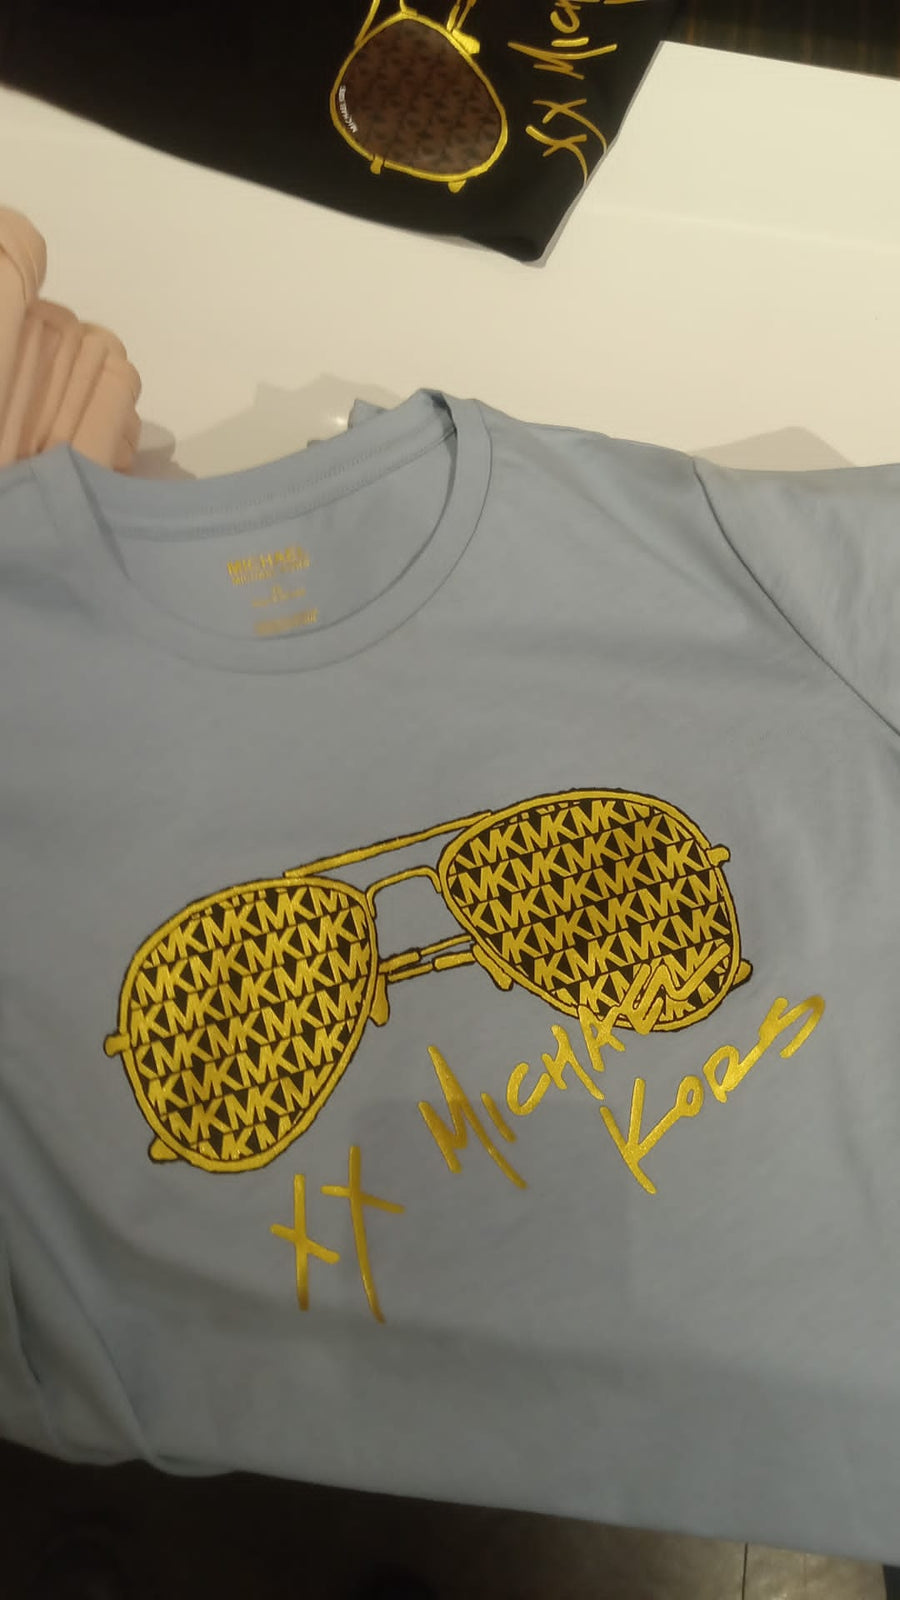 Michael Kors sunglasses t-shirt